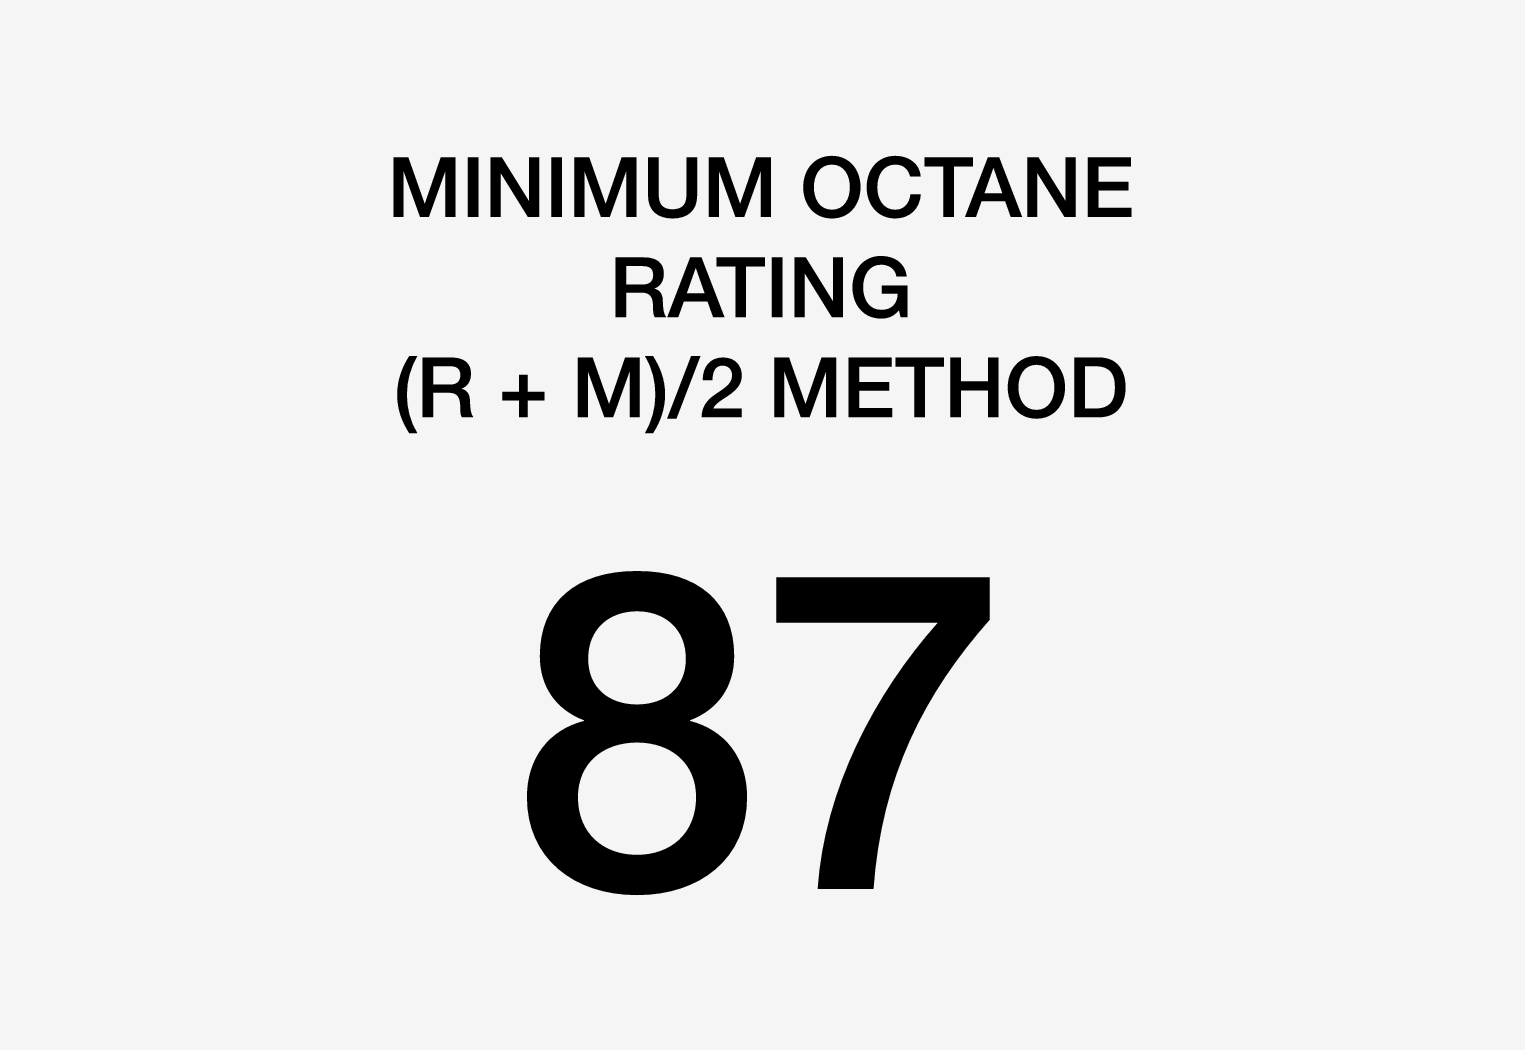 P6-1817-XC40-US manual 87 octane